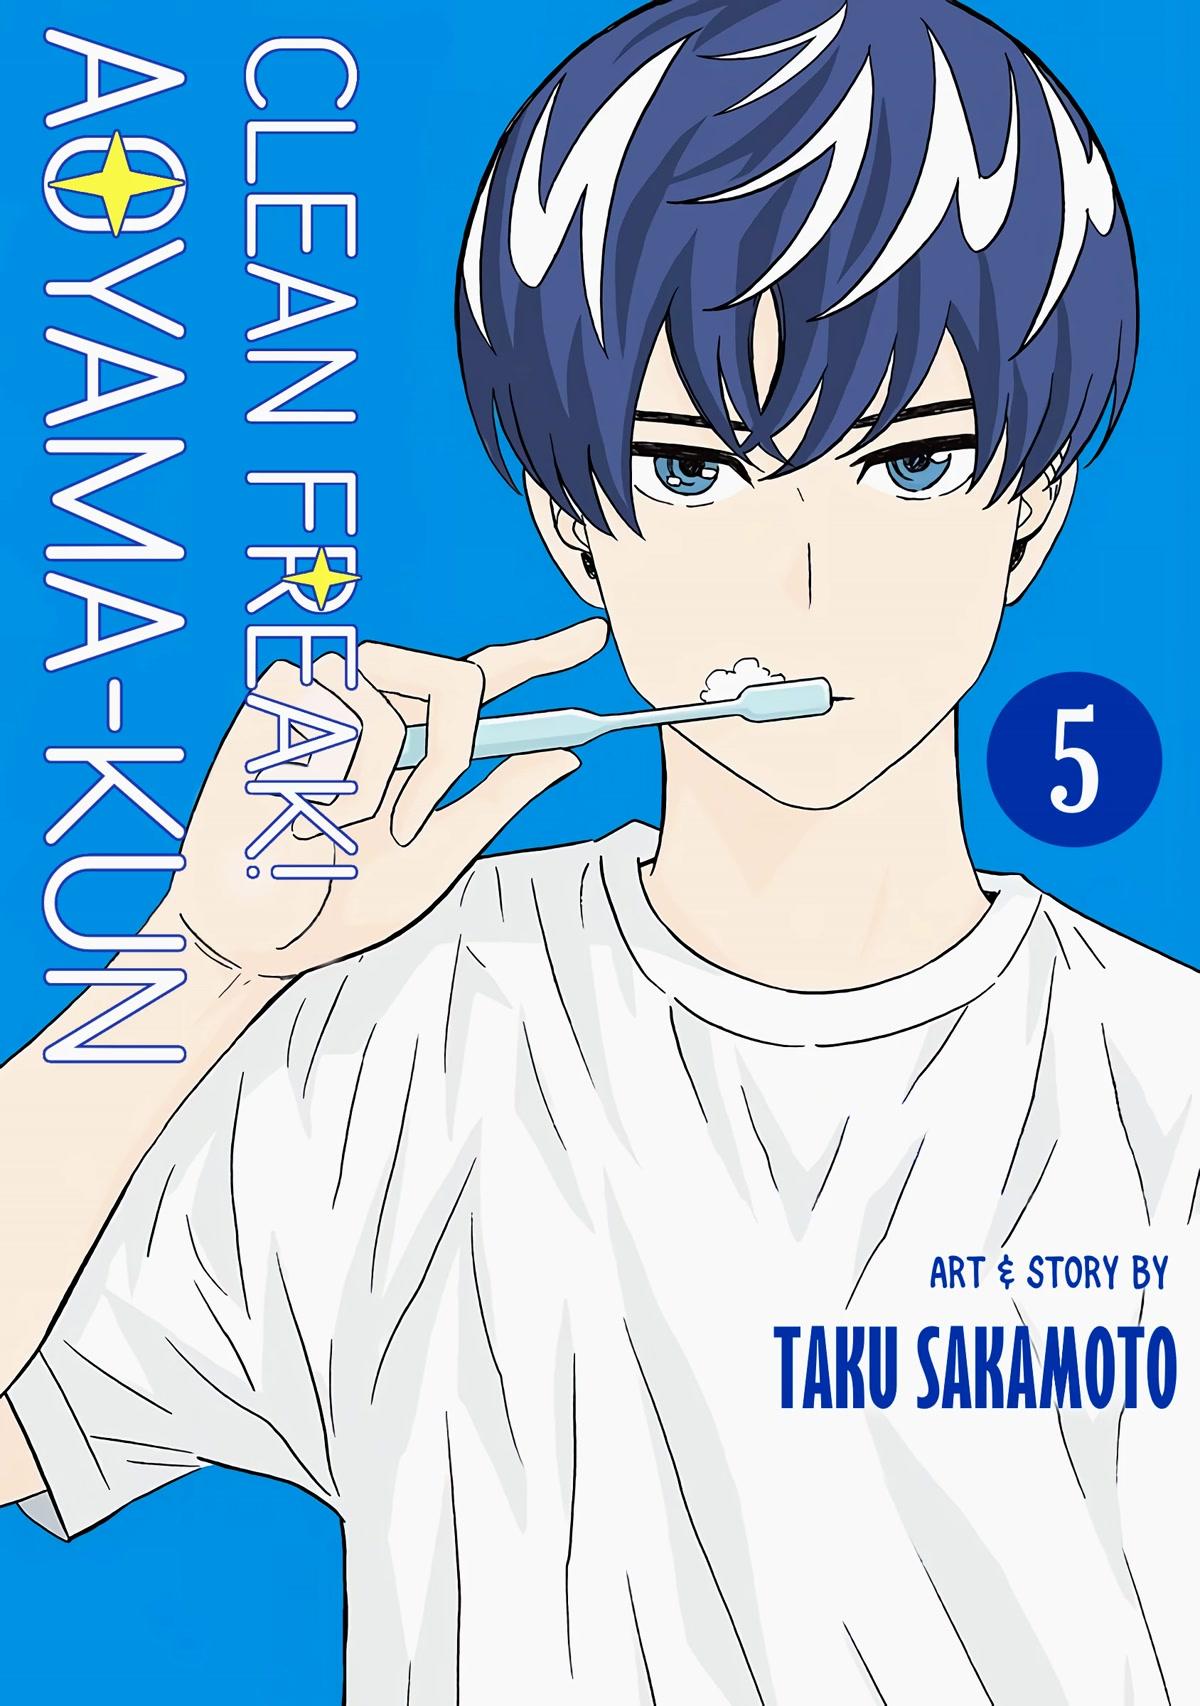 Read Clean Freak! Aoyama-Kun Chapter 11: Gotou-Chan Is Always Busy